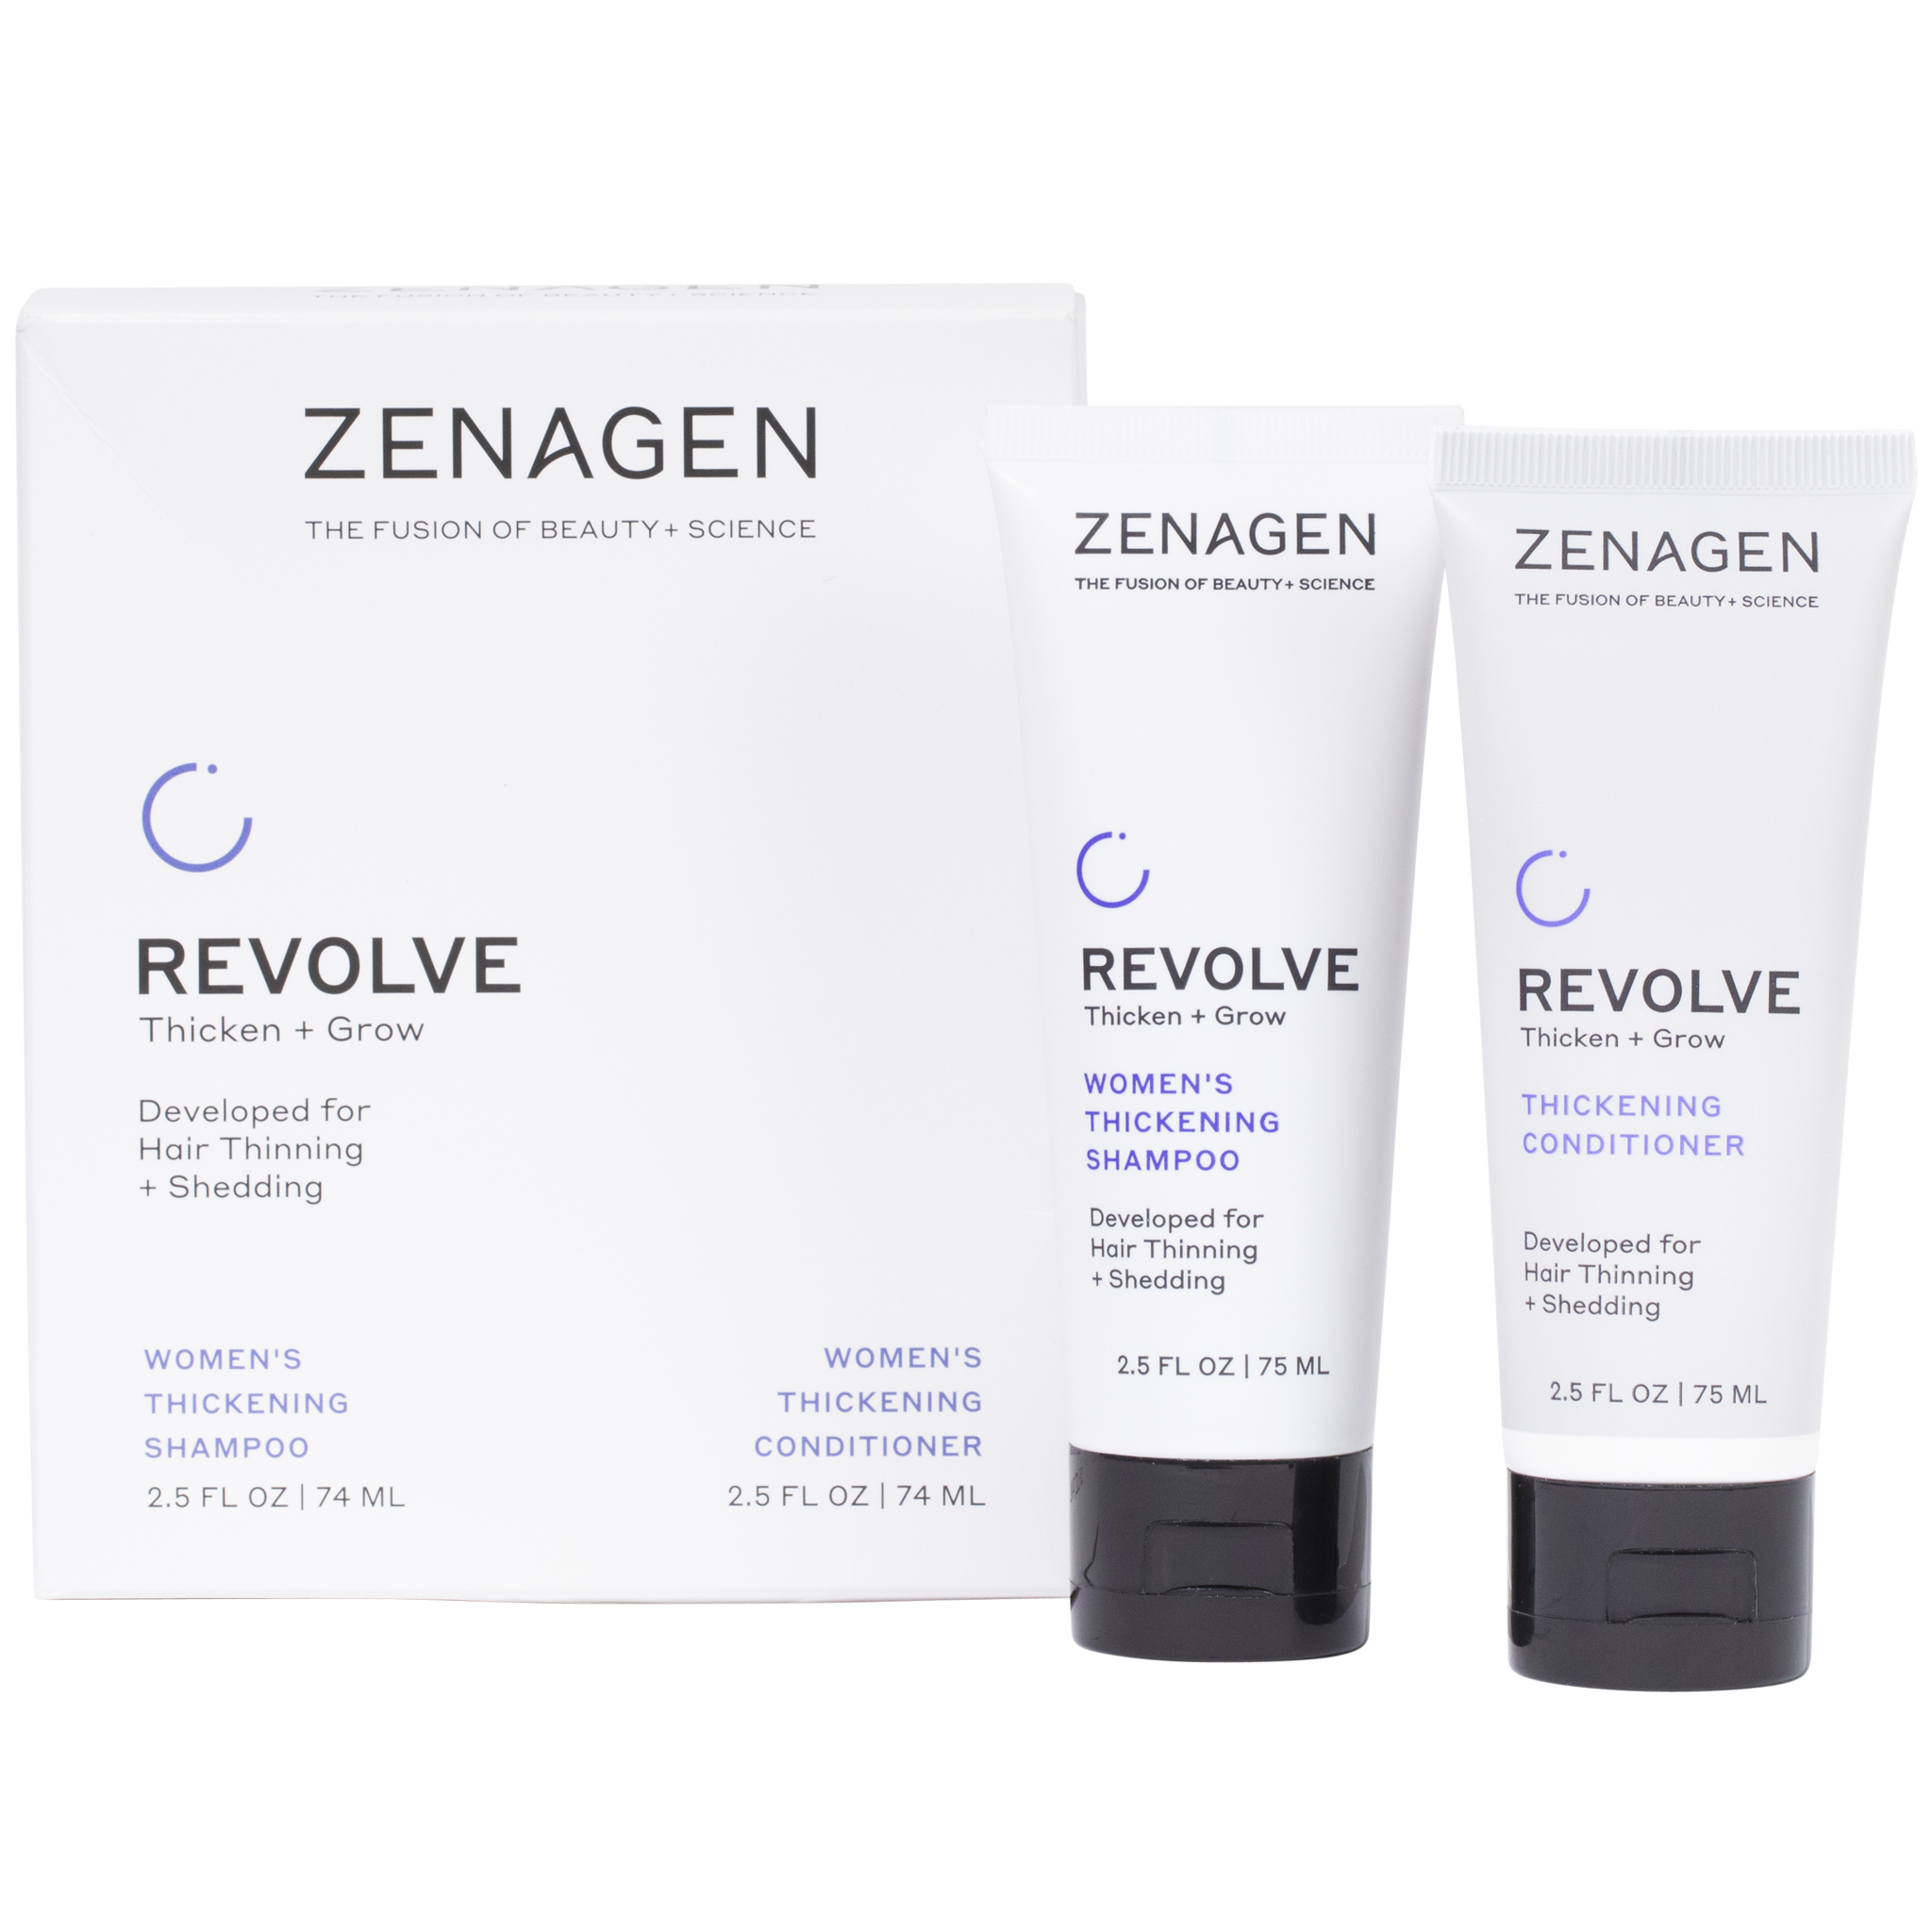 Zenagen Revolve Women's Travel Size Shampoo and Conditioner next to box